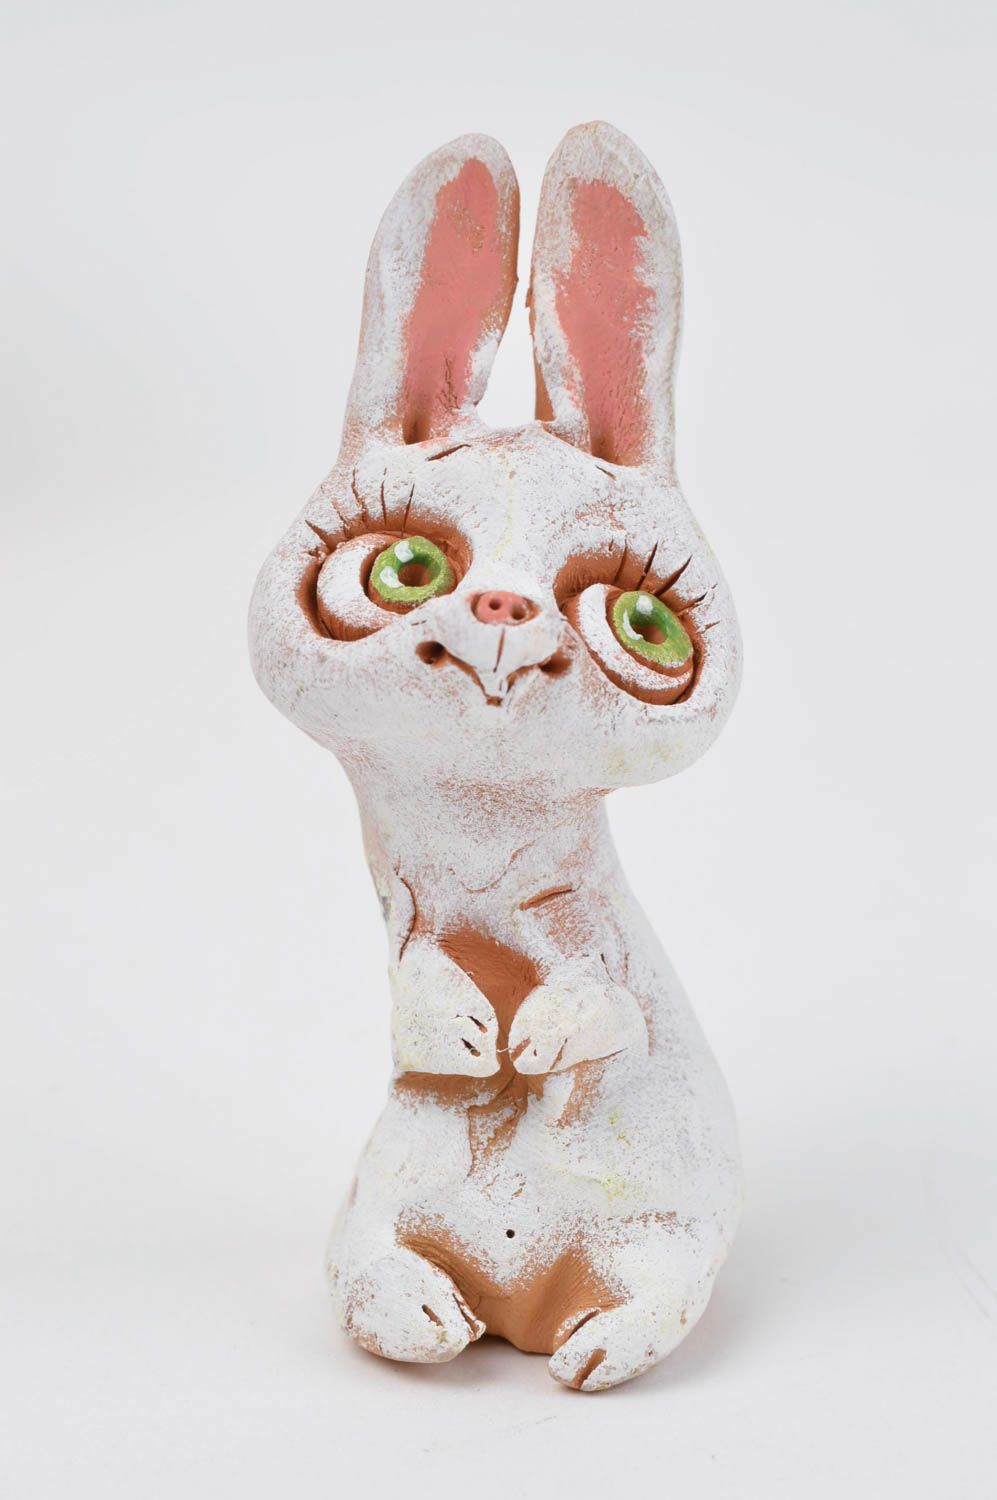 Handmade cute figurine stylish ceramic statuette unusual home decor ideas photo 2